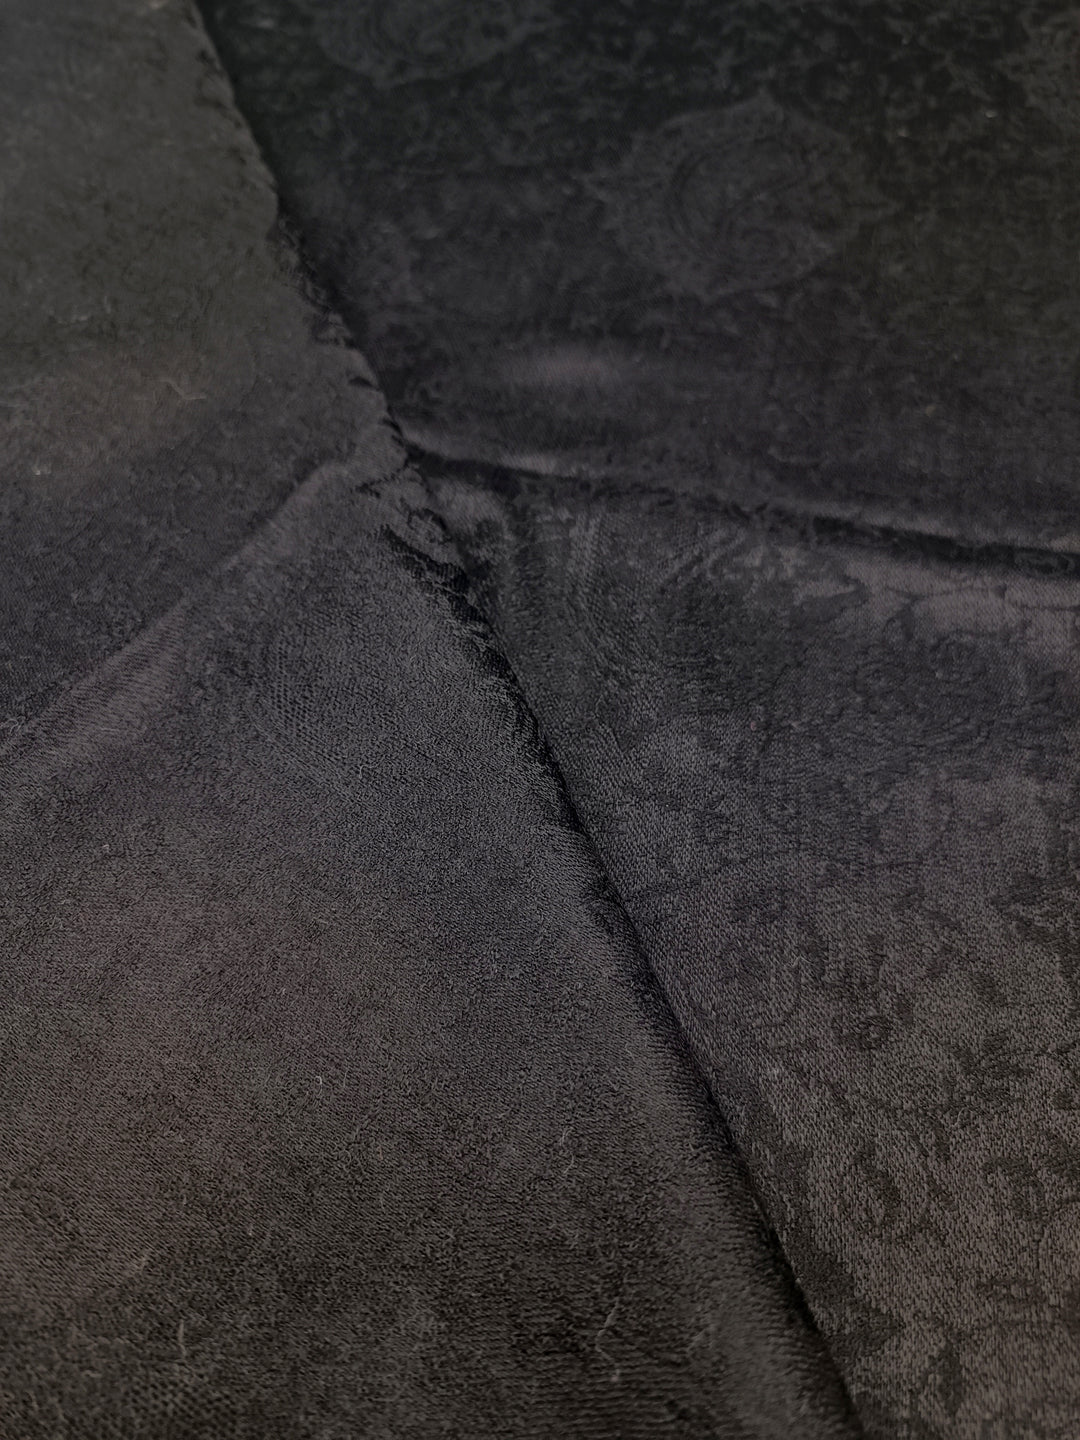 Premium Quality Black Gray Woven Pashmina  Cashmere Stole 2